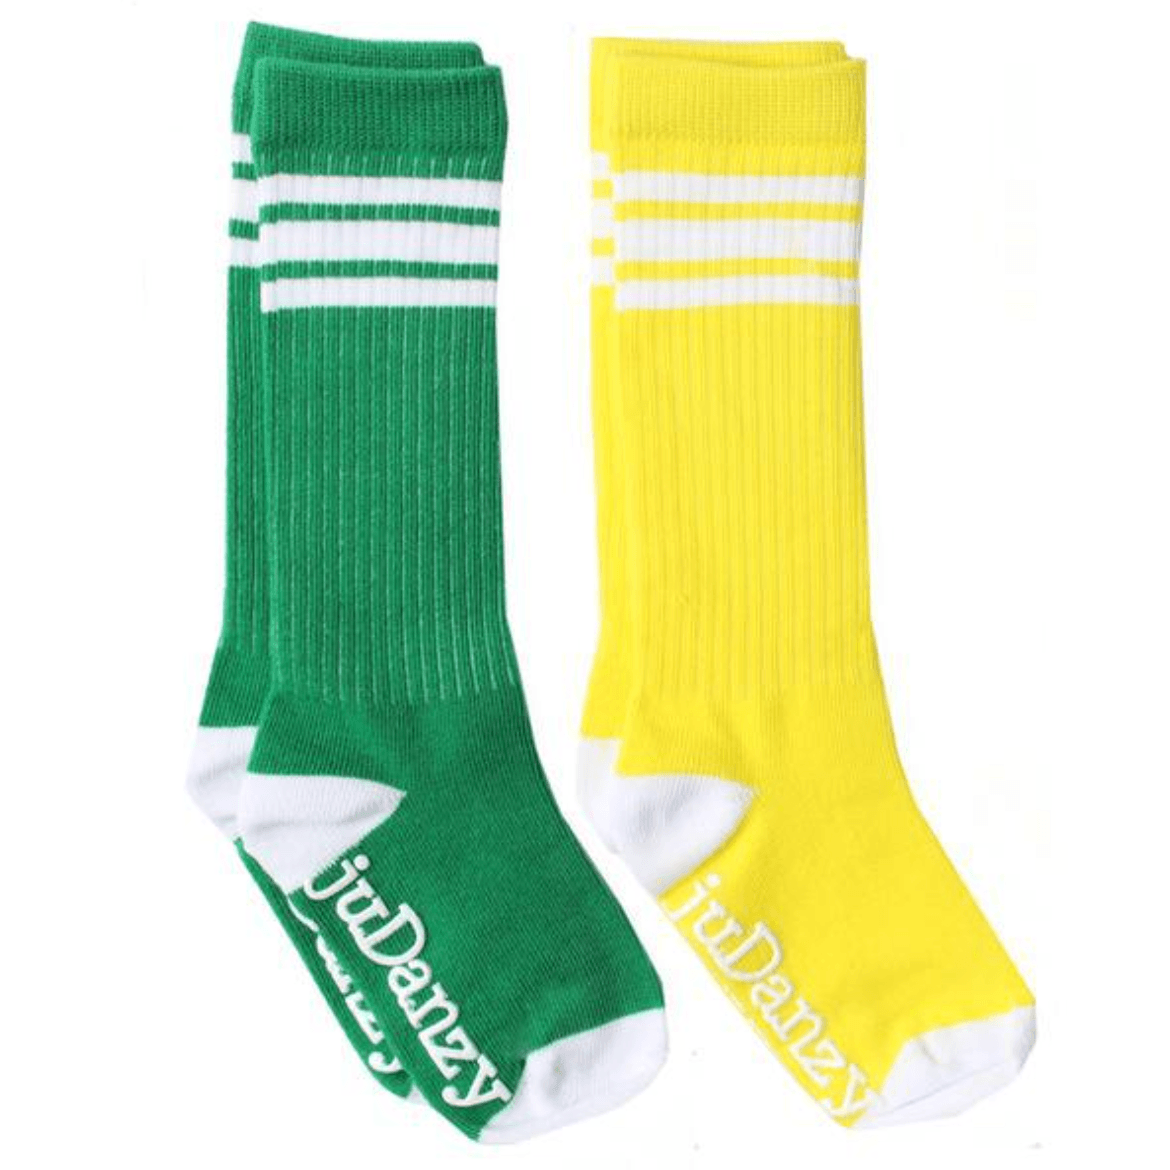 Green & Yellow Tube Socks accessories juDanzy 